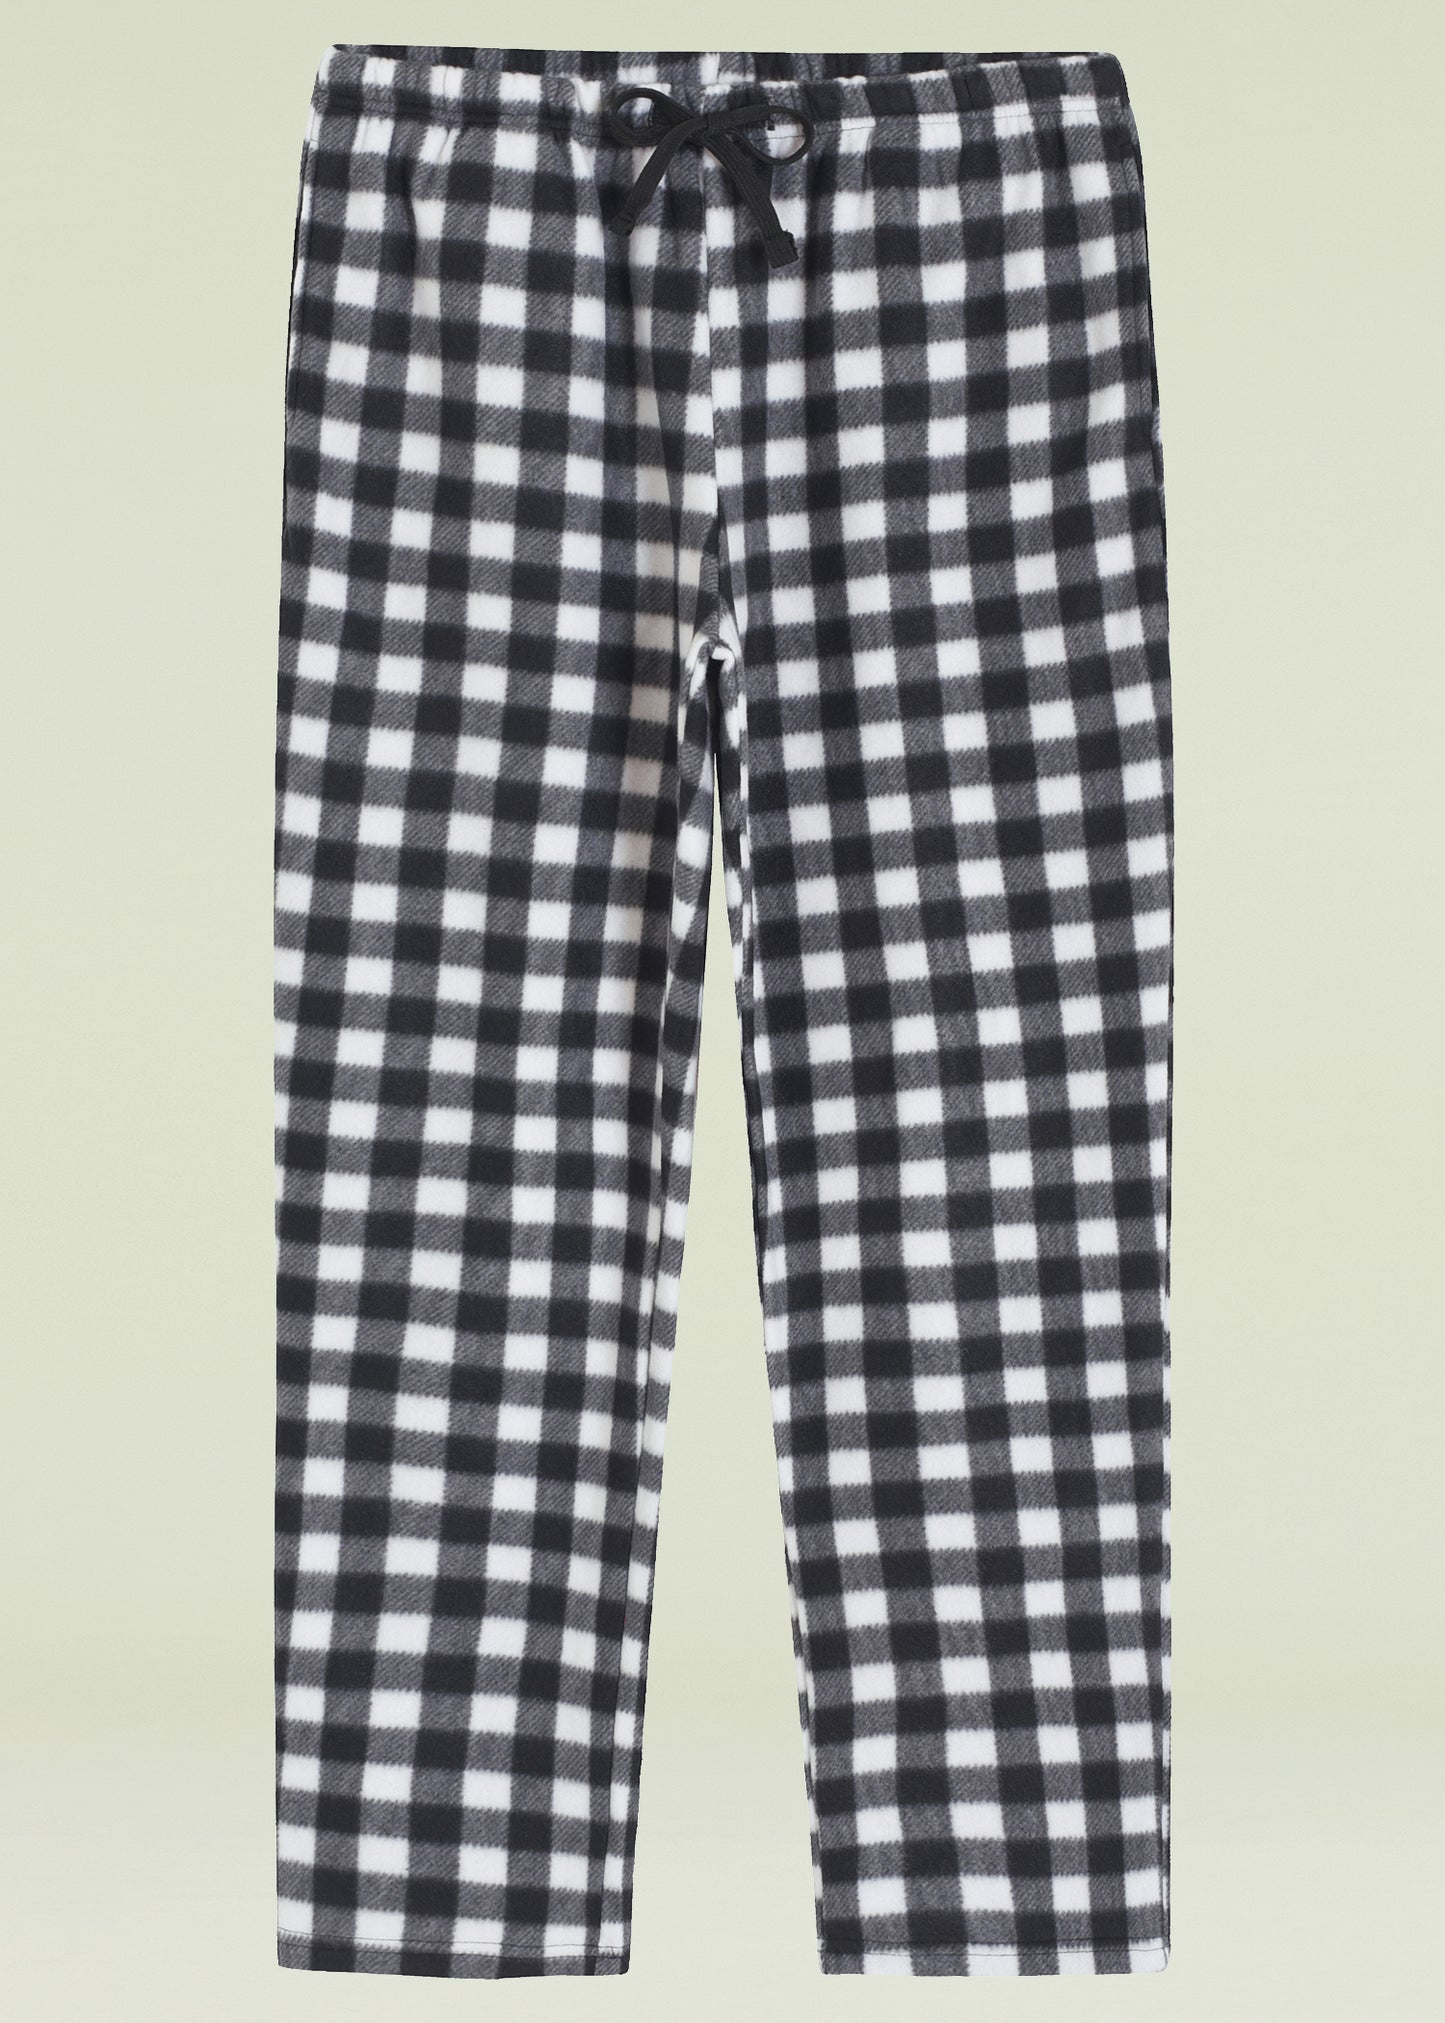 Women's Fleece Plaid Pajama Pants with Pockets